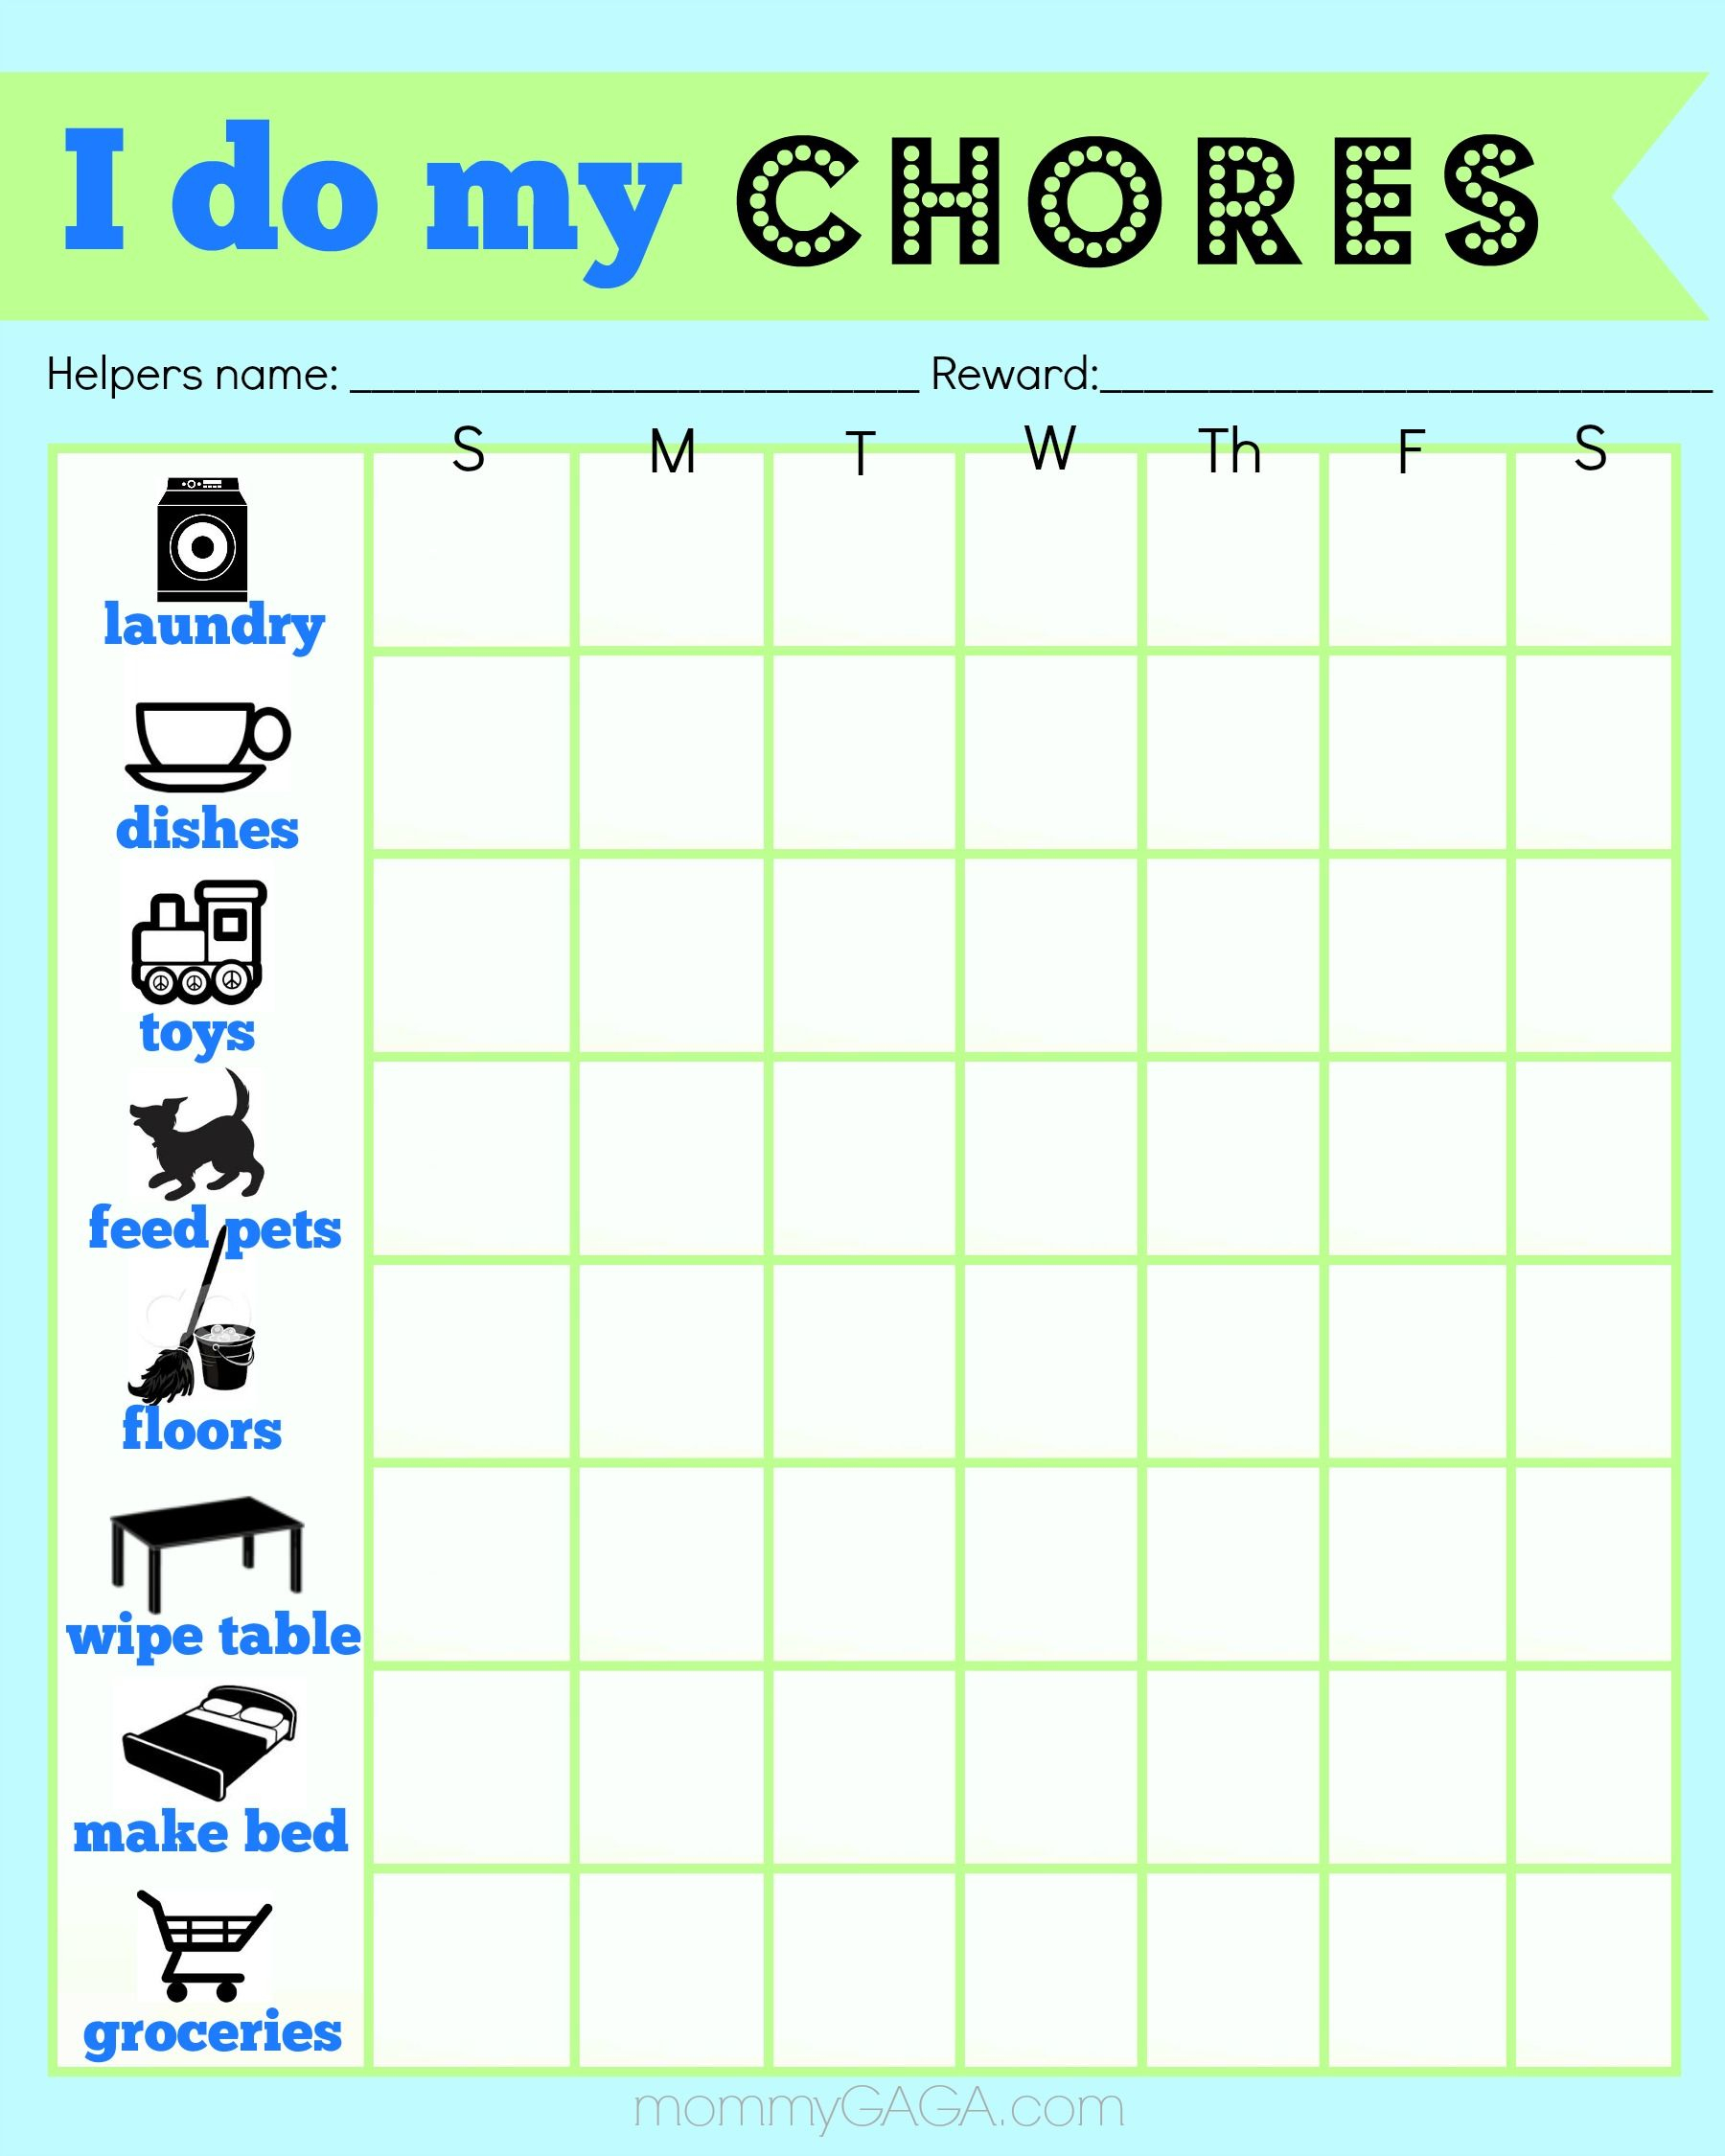 10 Chores For Preschoolers + A Printable Chore Chart | !! Top - Free Printable Chore Charts For 7 Year Olds